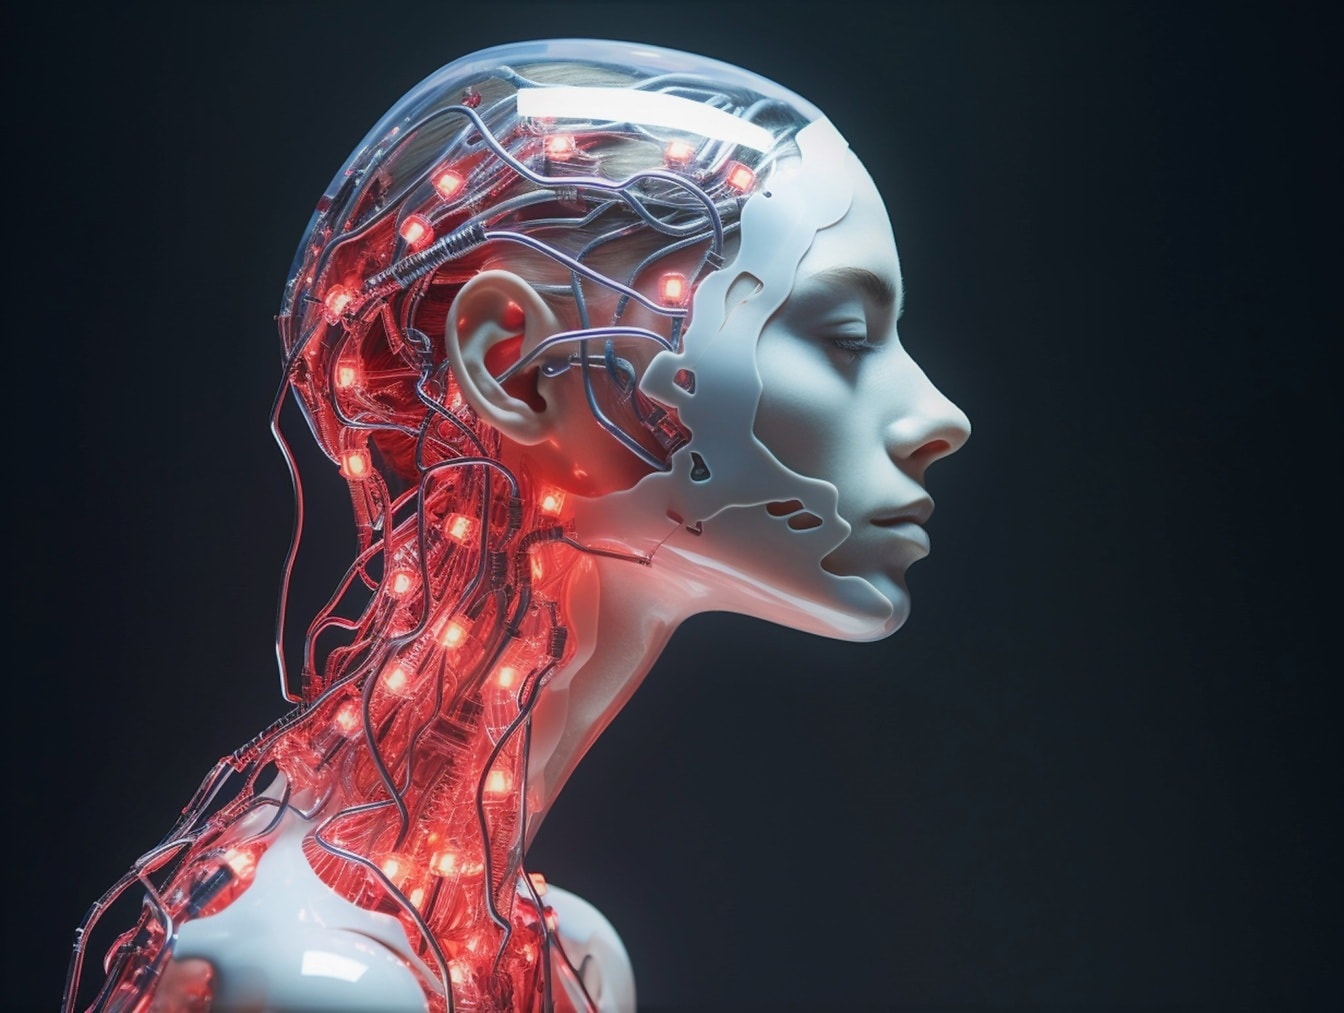 Robot cyborg umanoide donna con intelligenza artificiale